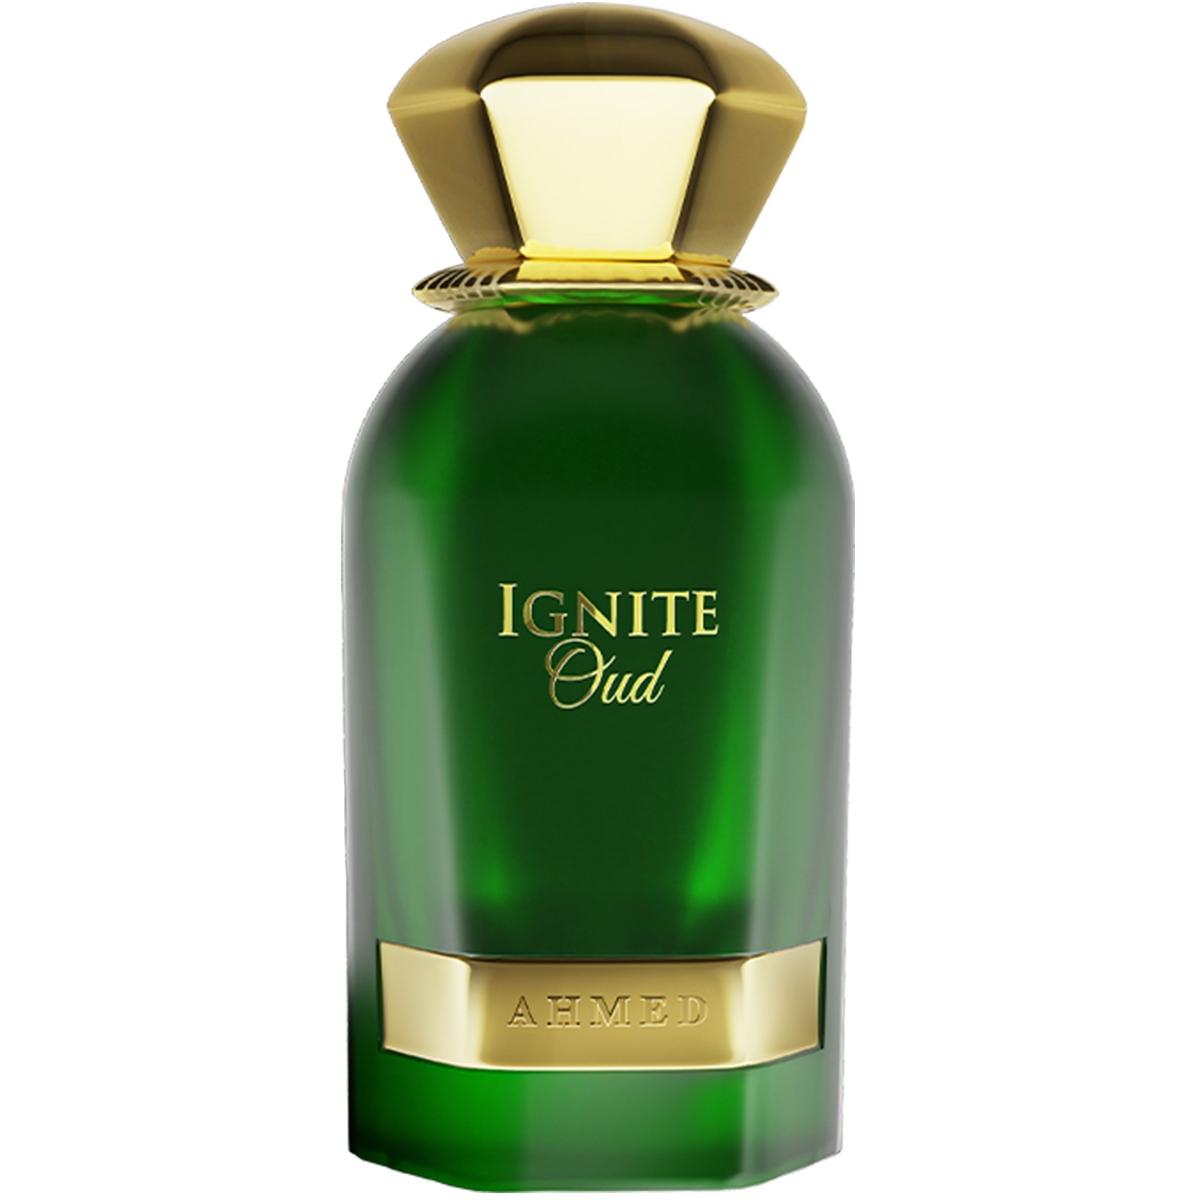 Ignite Oud Ahmed al Maghribi Perfumes Perfumes, Unisex Perfumes, Arada Perfumes